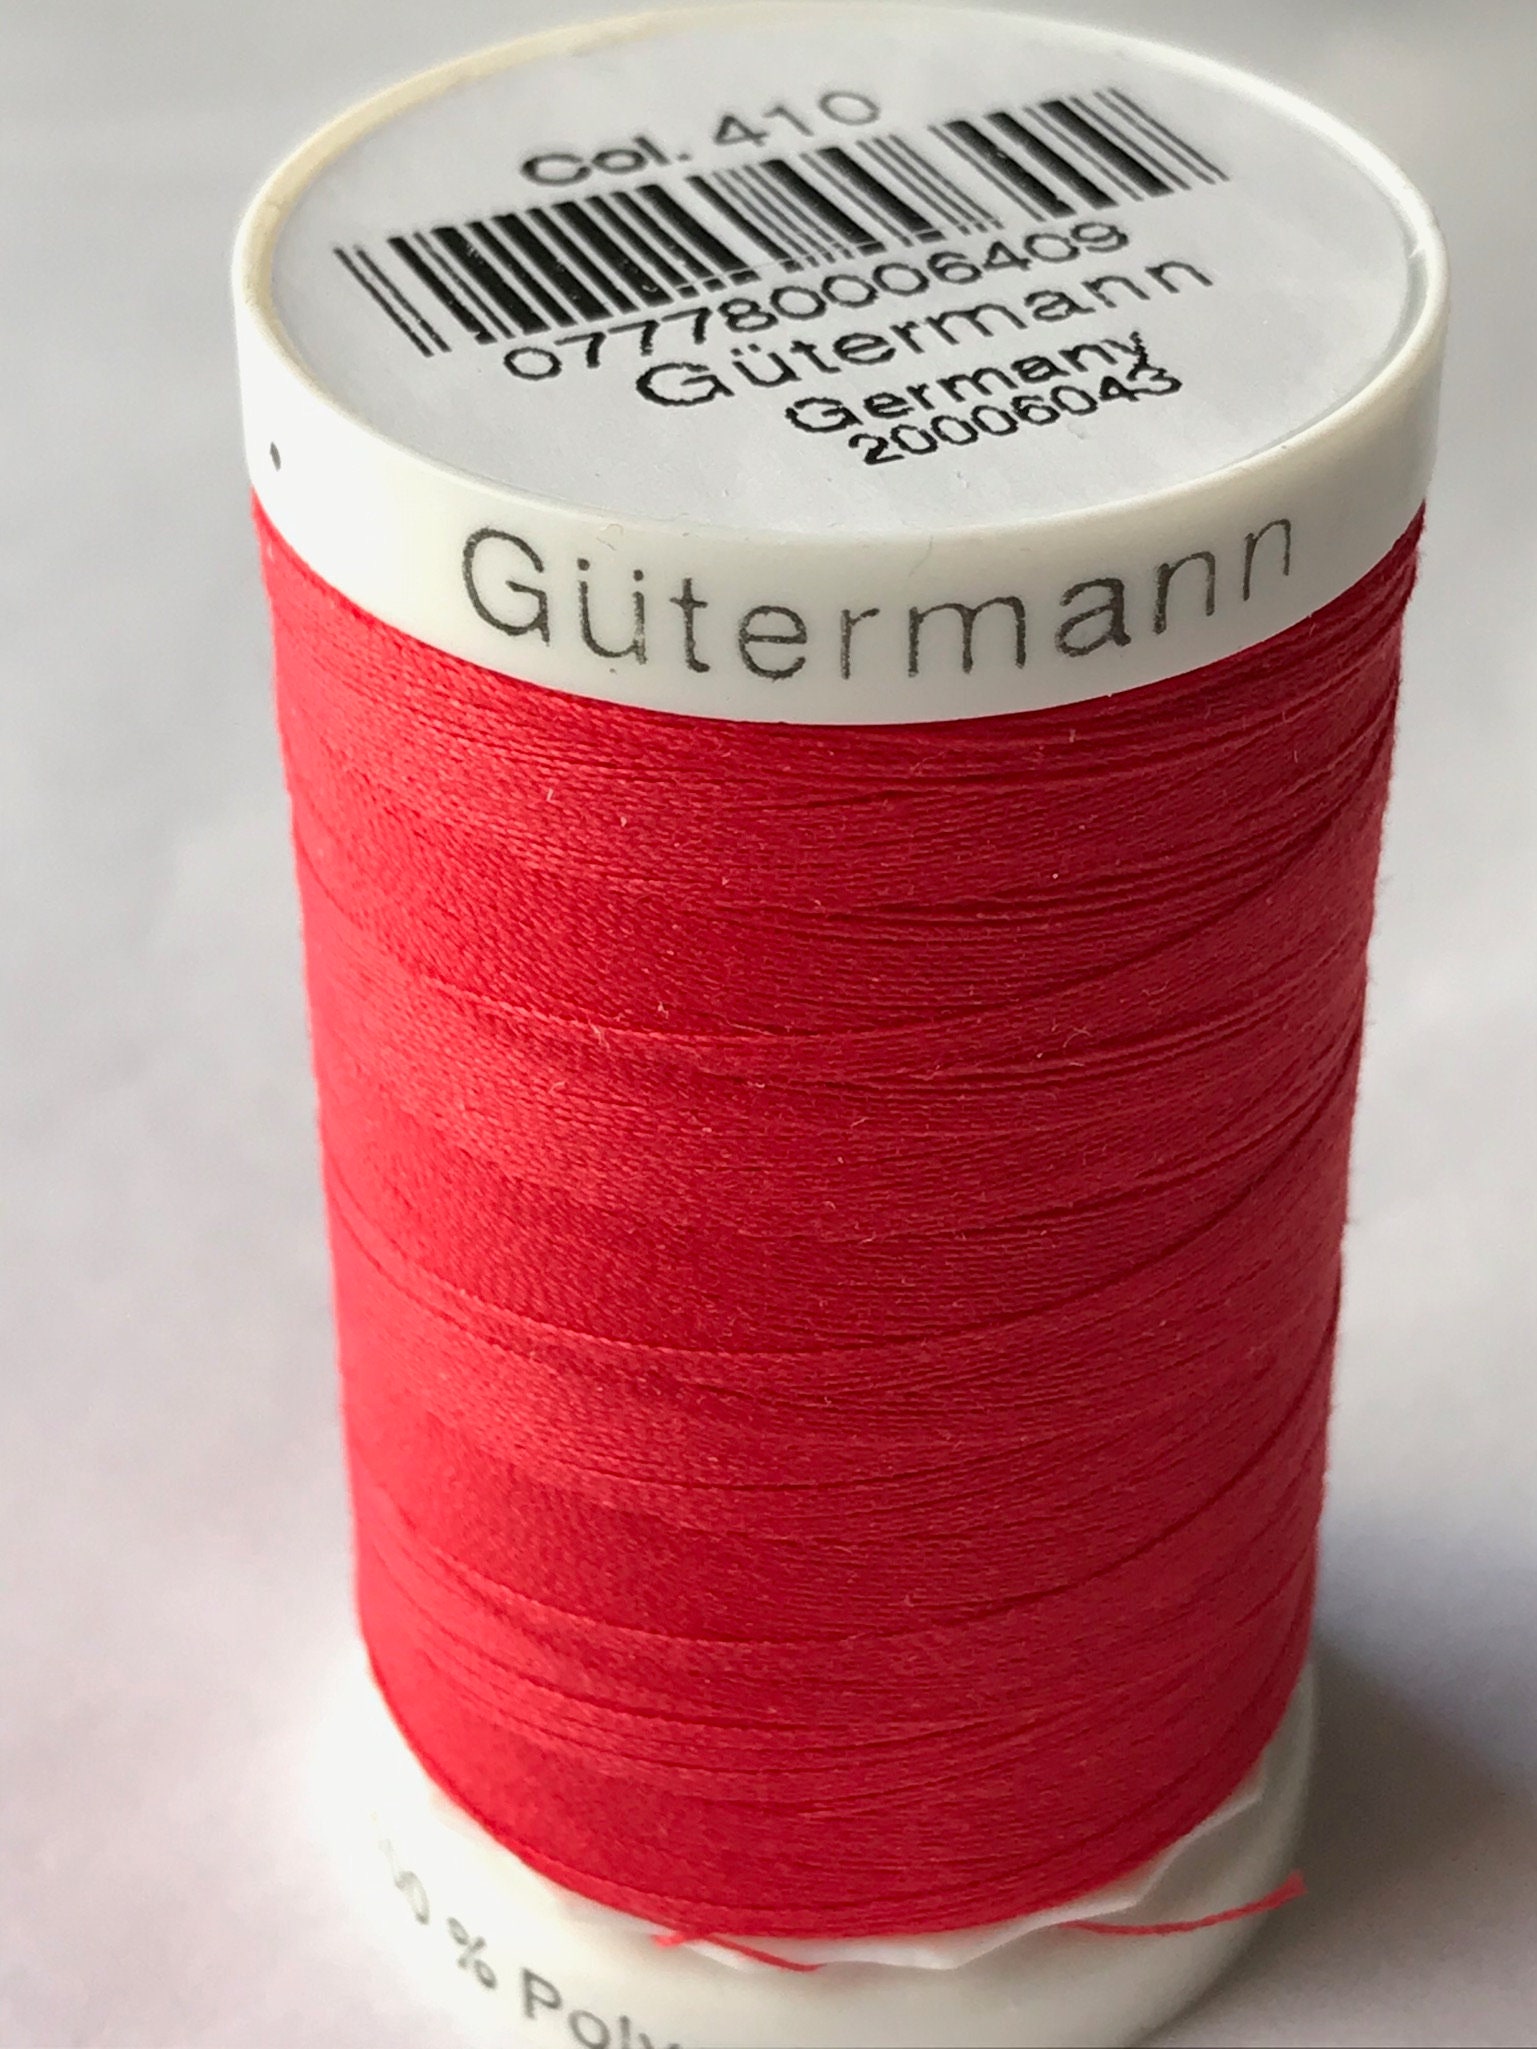 Gutermann Sew All Thread Set, 12 Spools